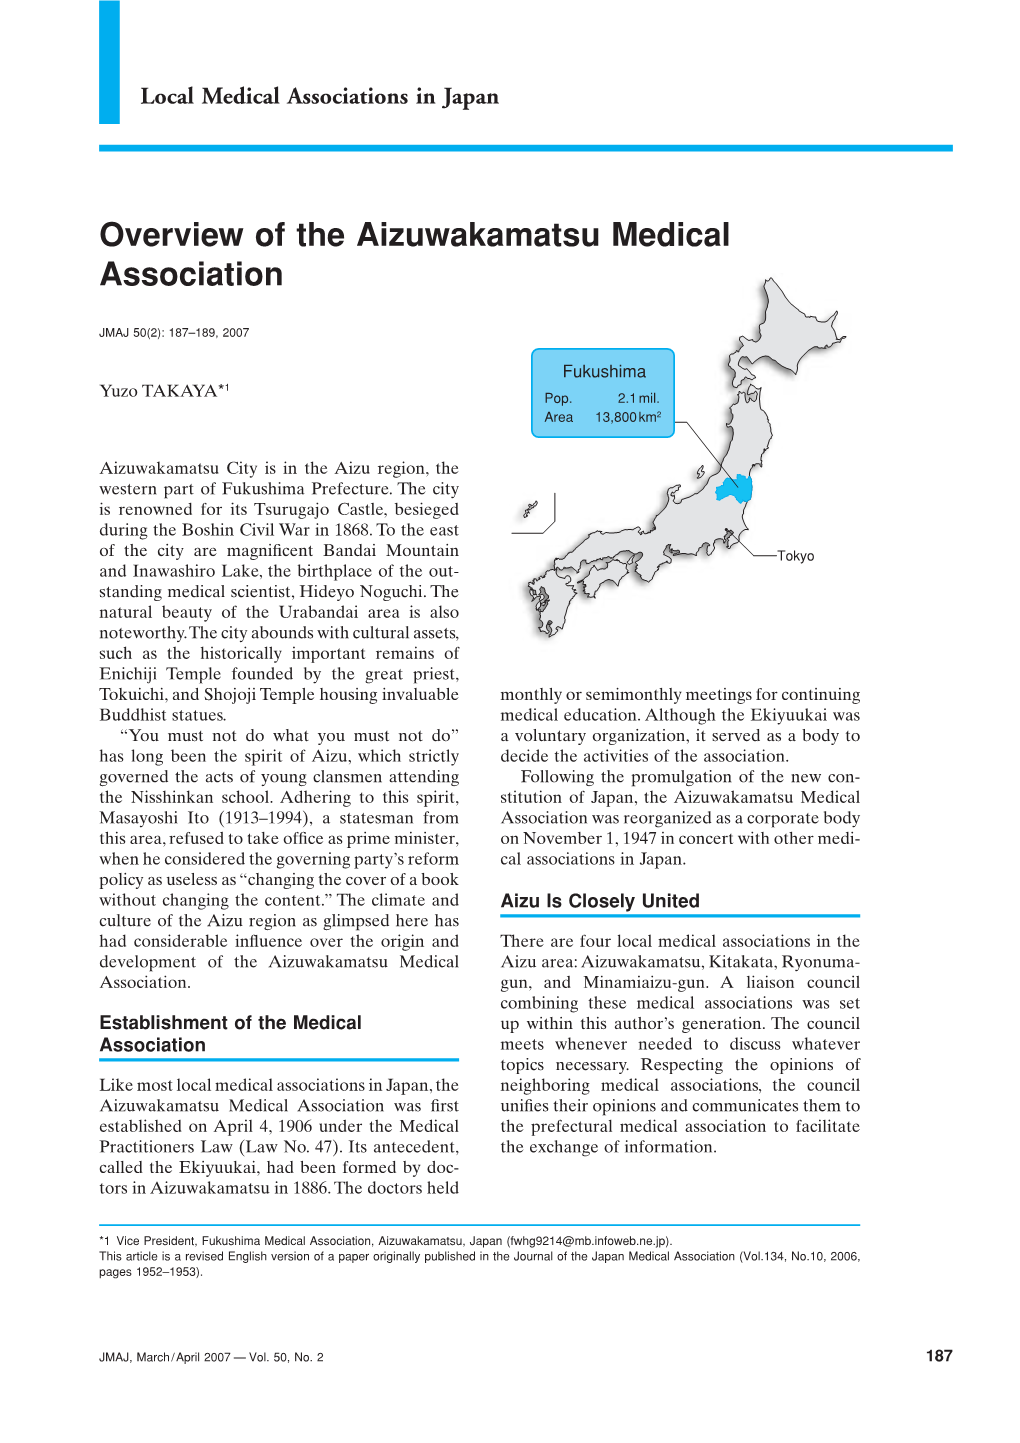 Overview of the Aizuwakamatsu Medical Association